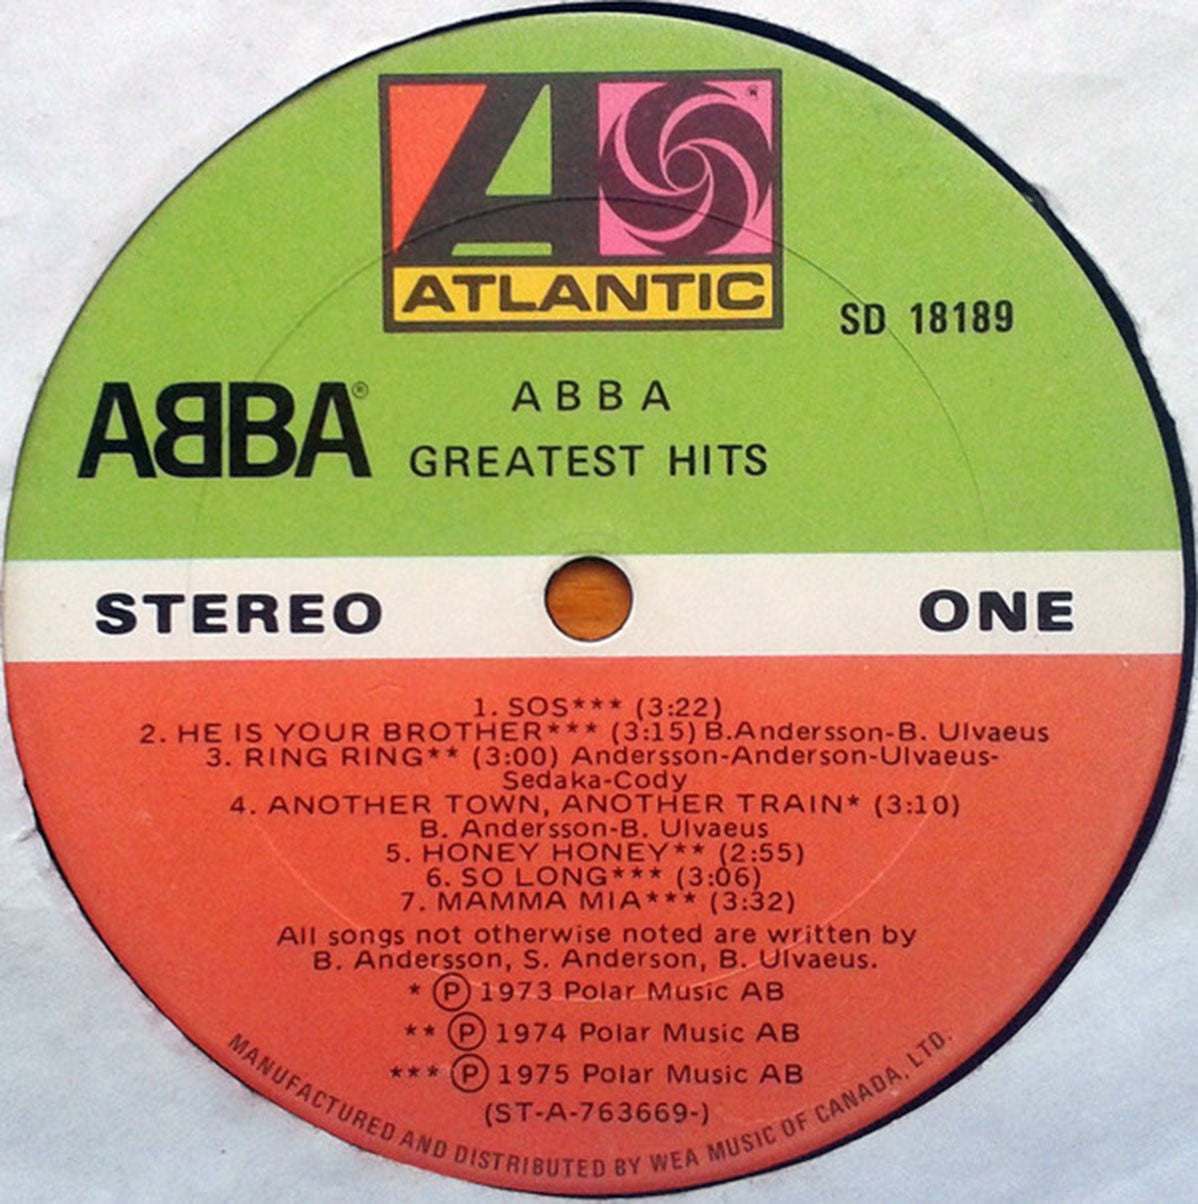 ABBA ‎– Greatest Hits - 1976